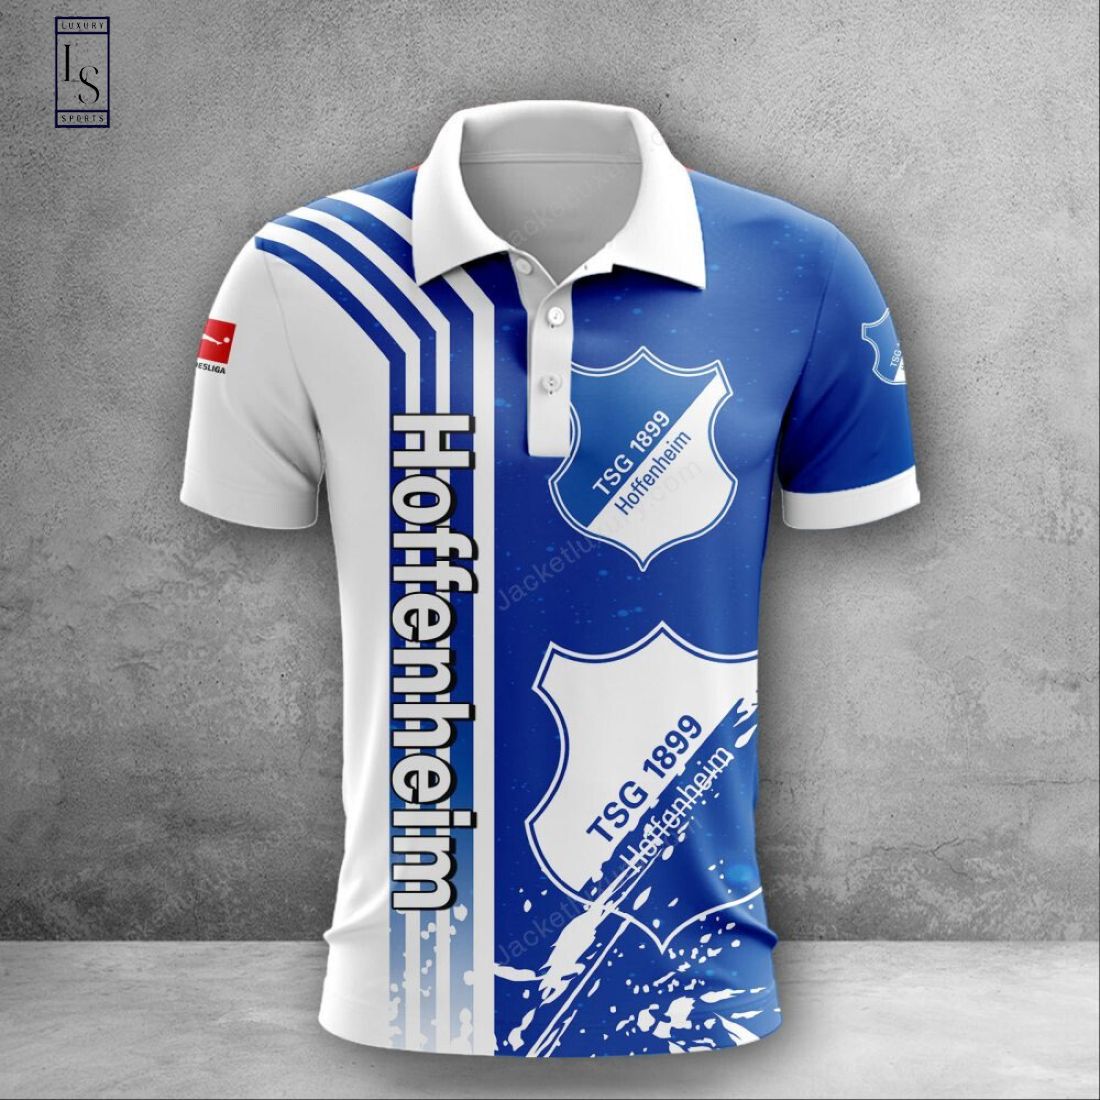 TSG Hoffenheim D Bundesliga Polo Shirt